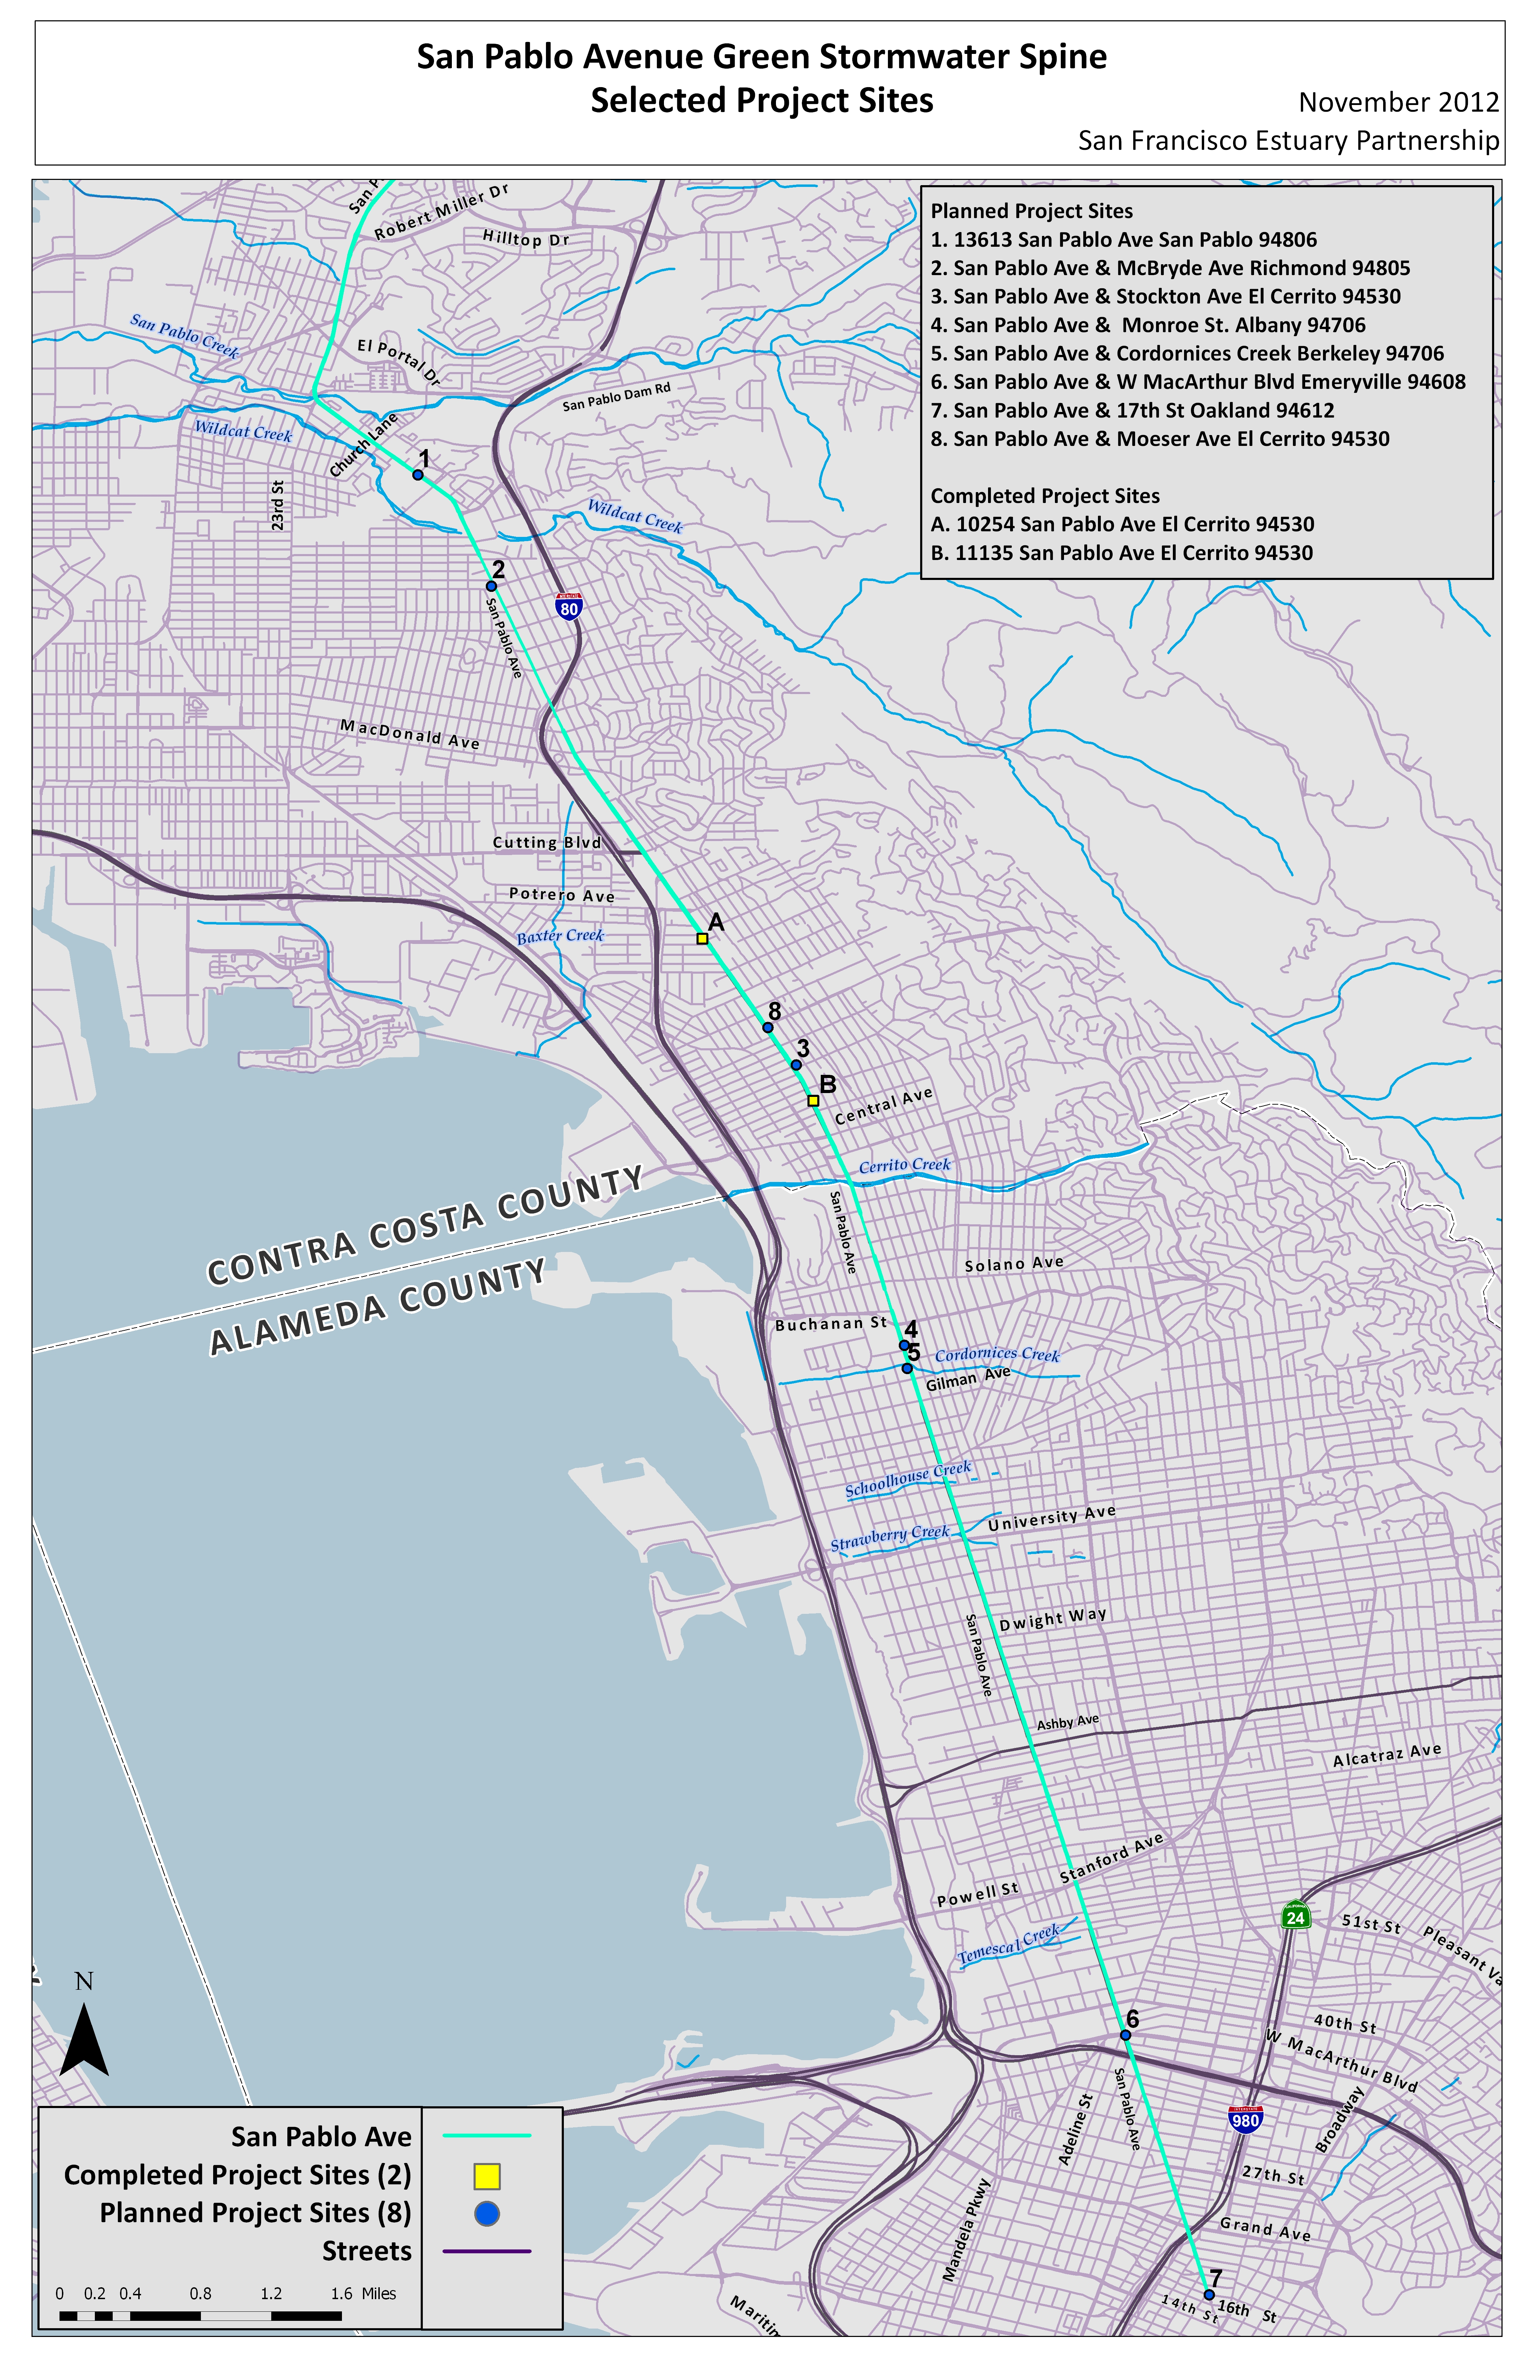 San Pablo Avenue Spine map